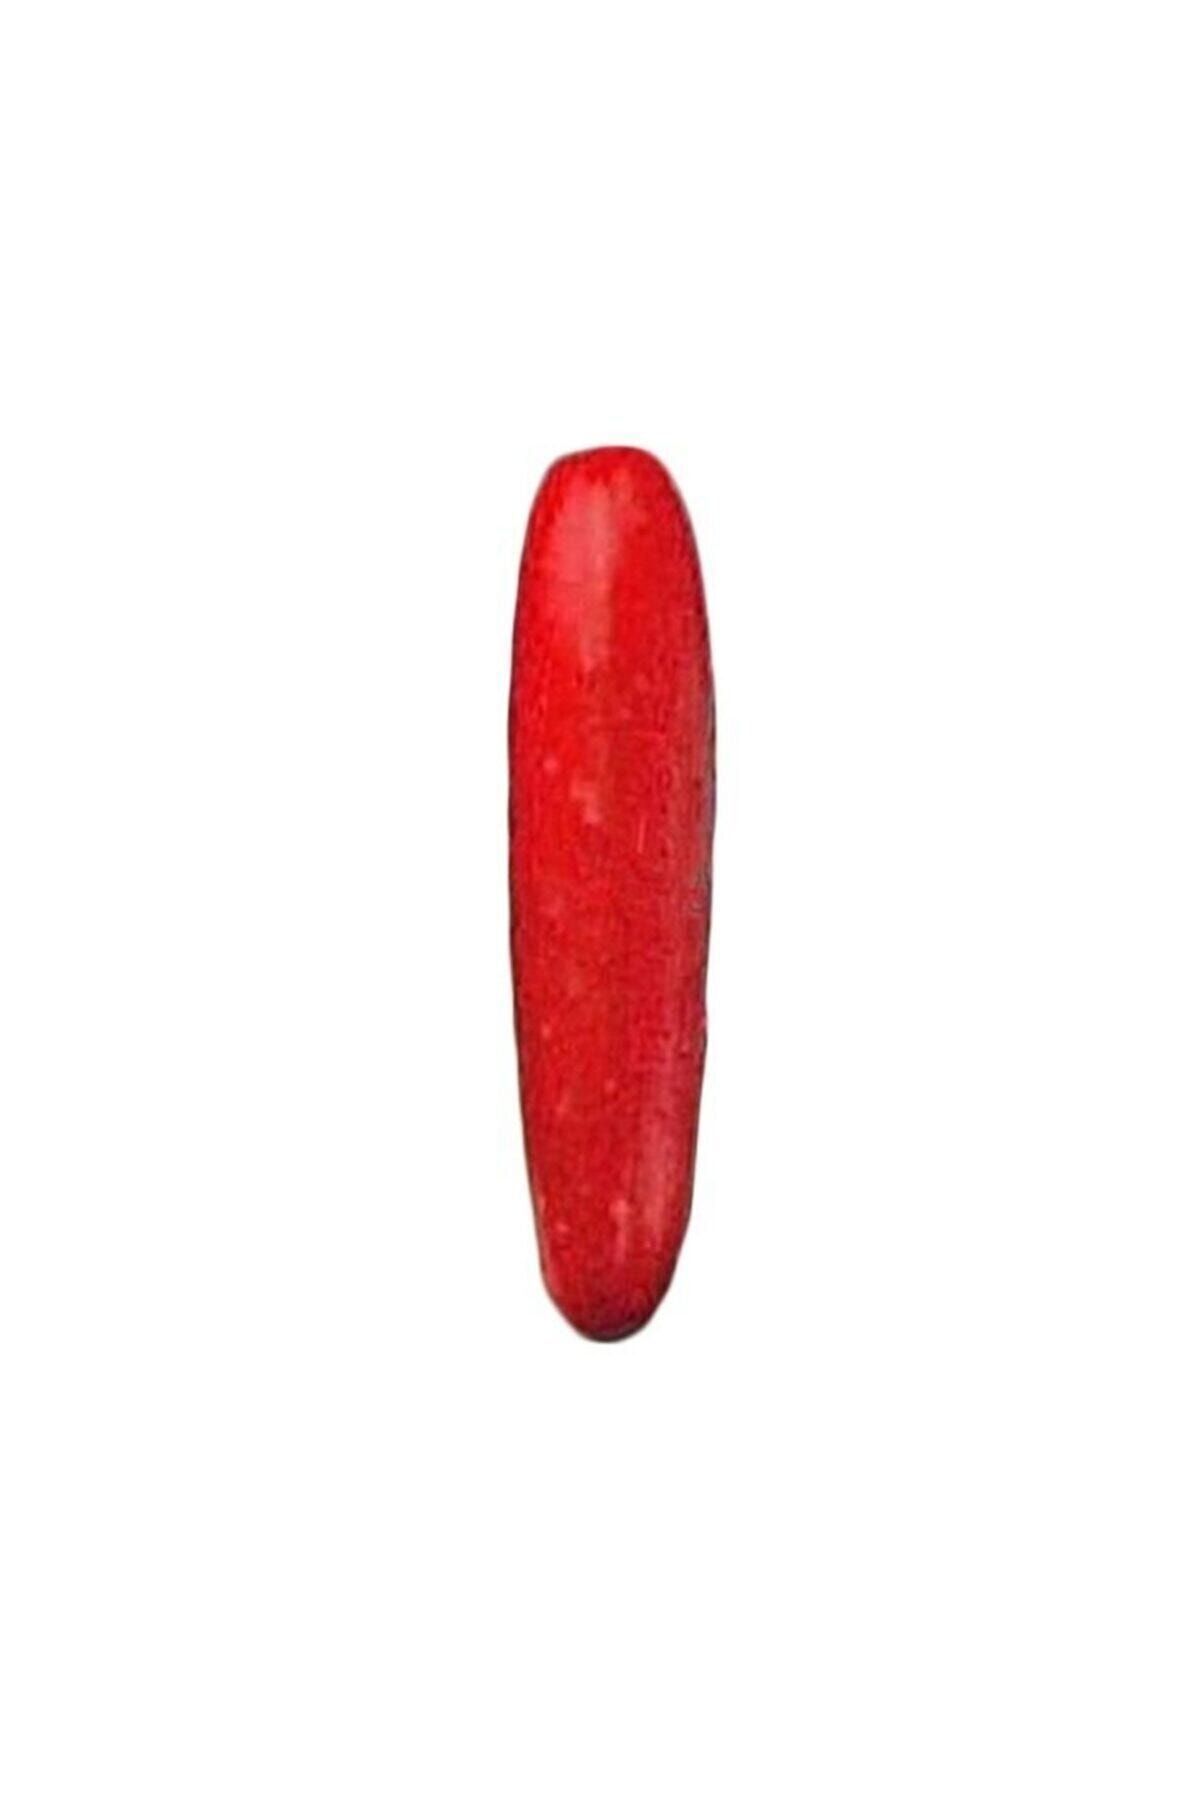 Tohum Dünyam Nadir Ithal Kırmızı Salatalık Tohumu 5 Adet Tohum Red Cucumber